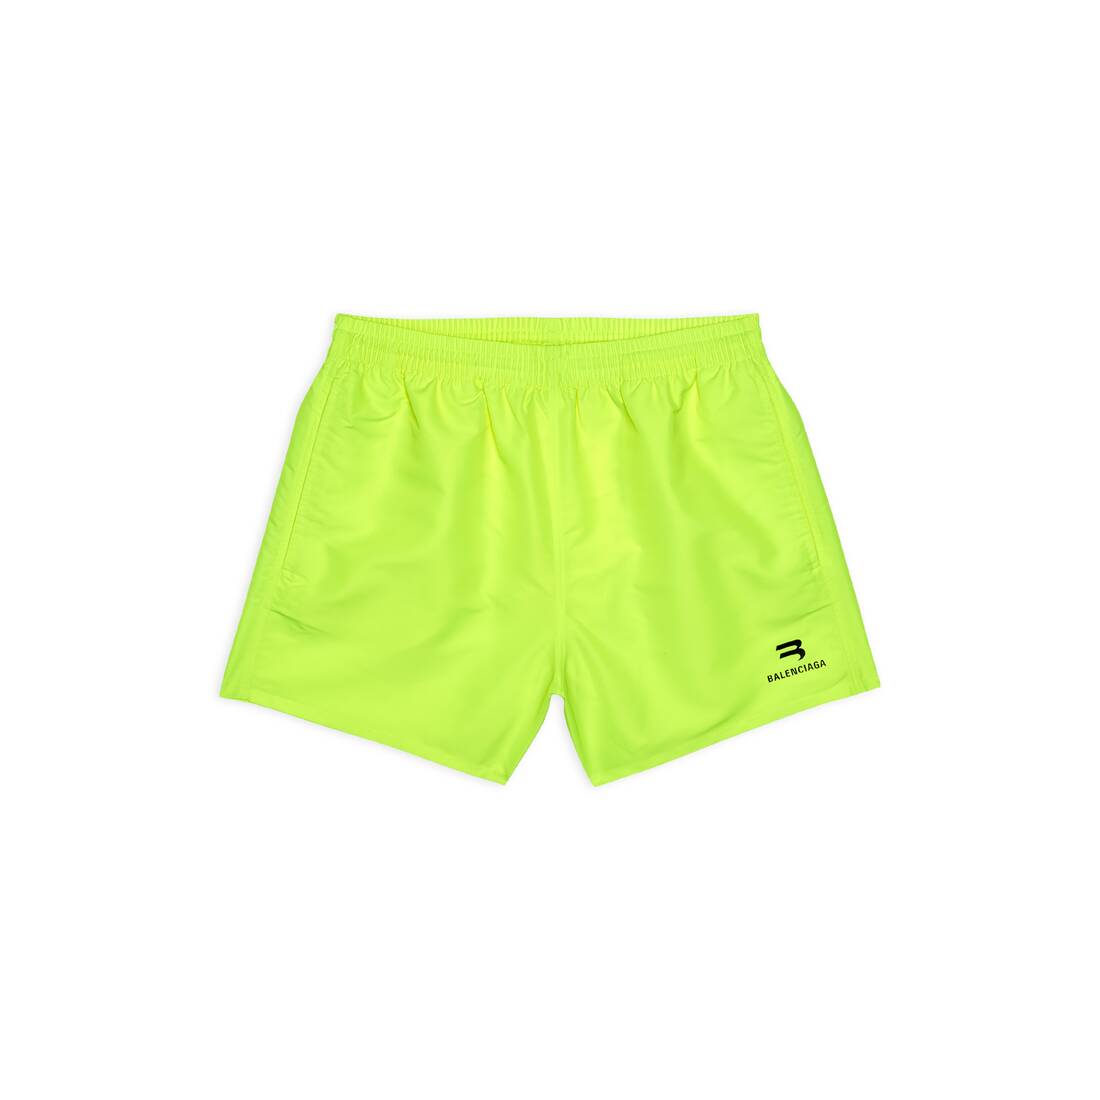 Men's Swim Shorts in Yellow